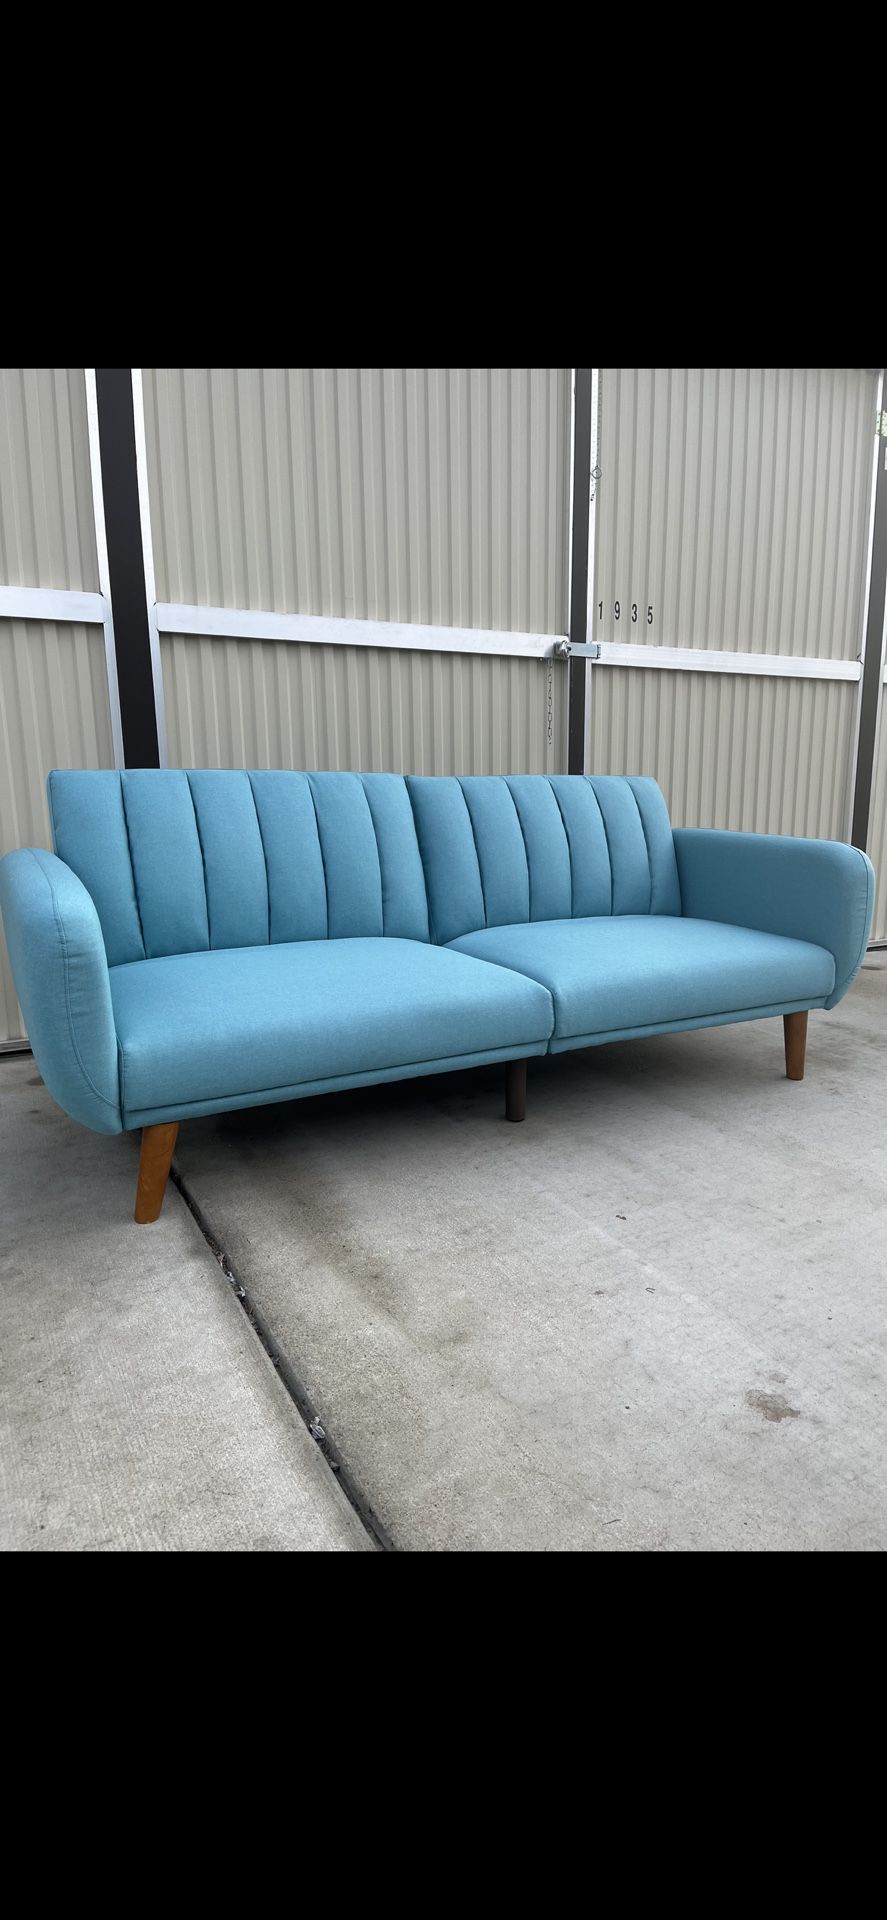 Brand New Light Blue Sofa Bed 